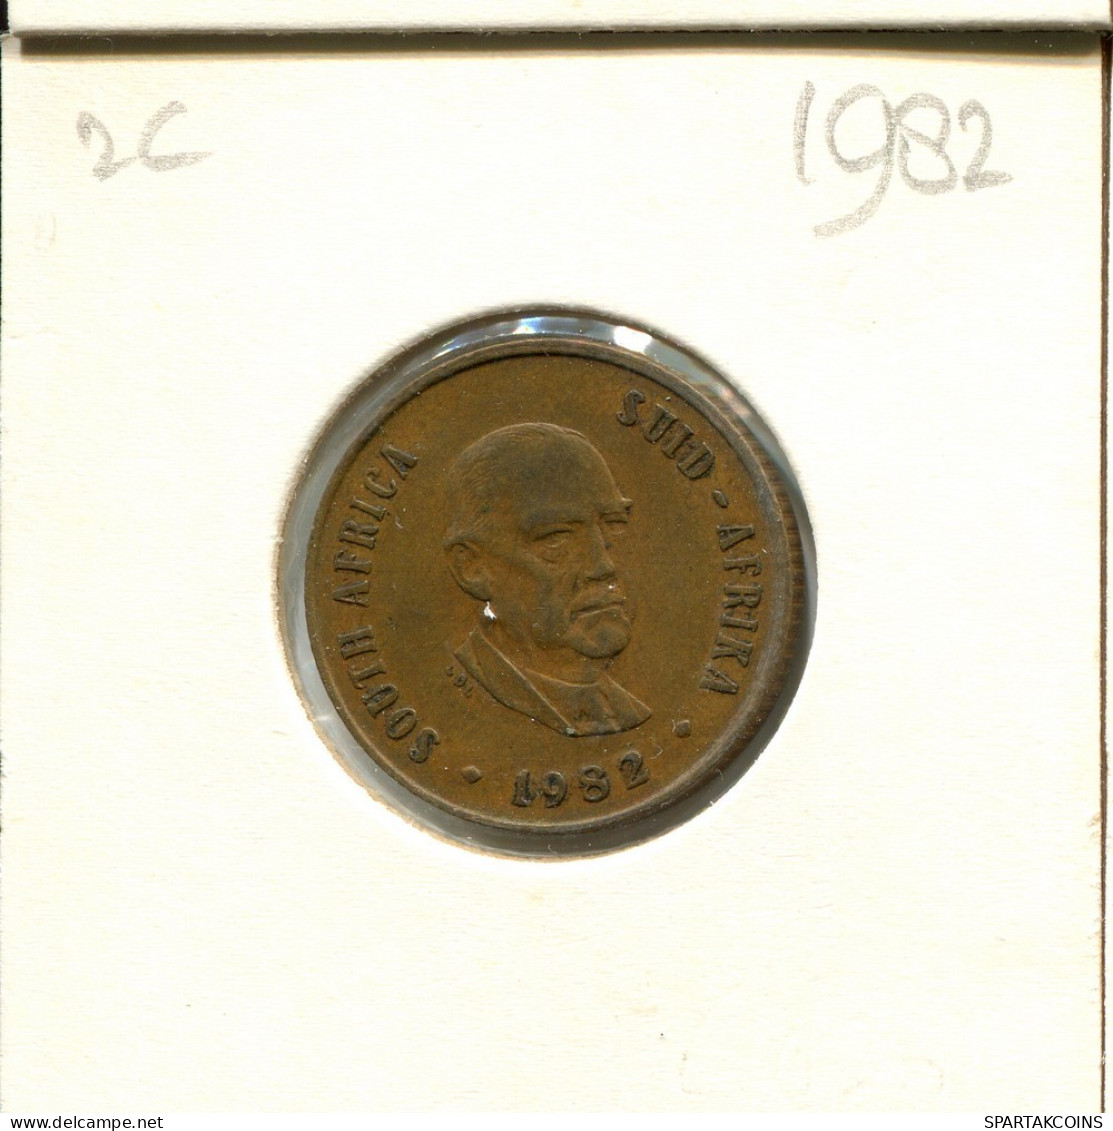 2 CENTS 1982 SOUTH AFRICA Coin #AT093.U.A - Afrique Du Sud